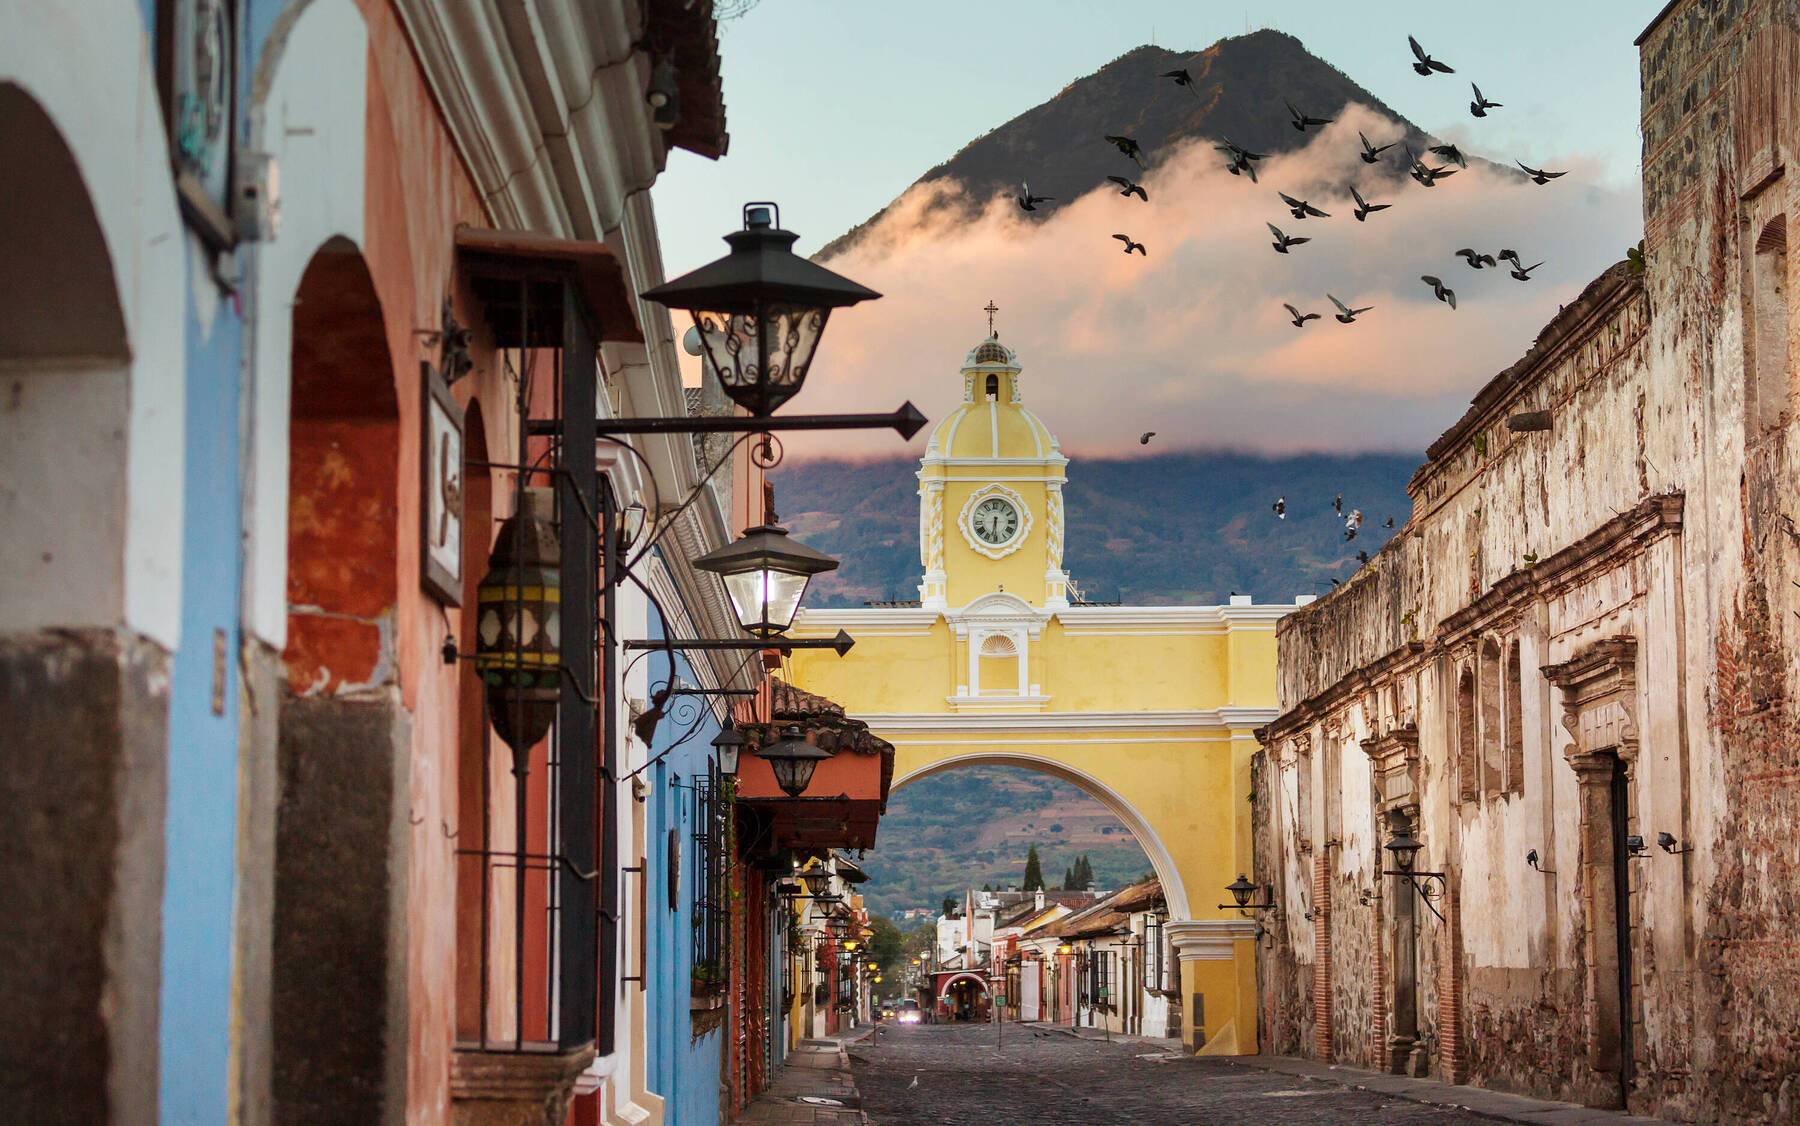 Antigua: Guatemala's UNESCO World Heritage site